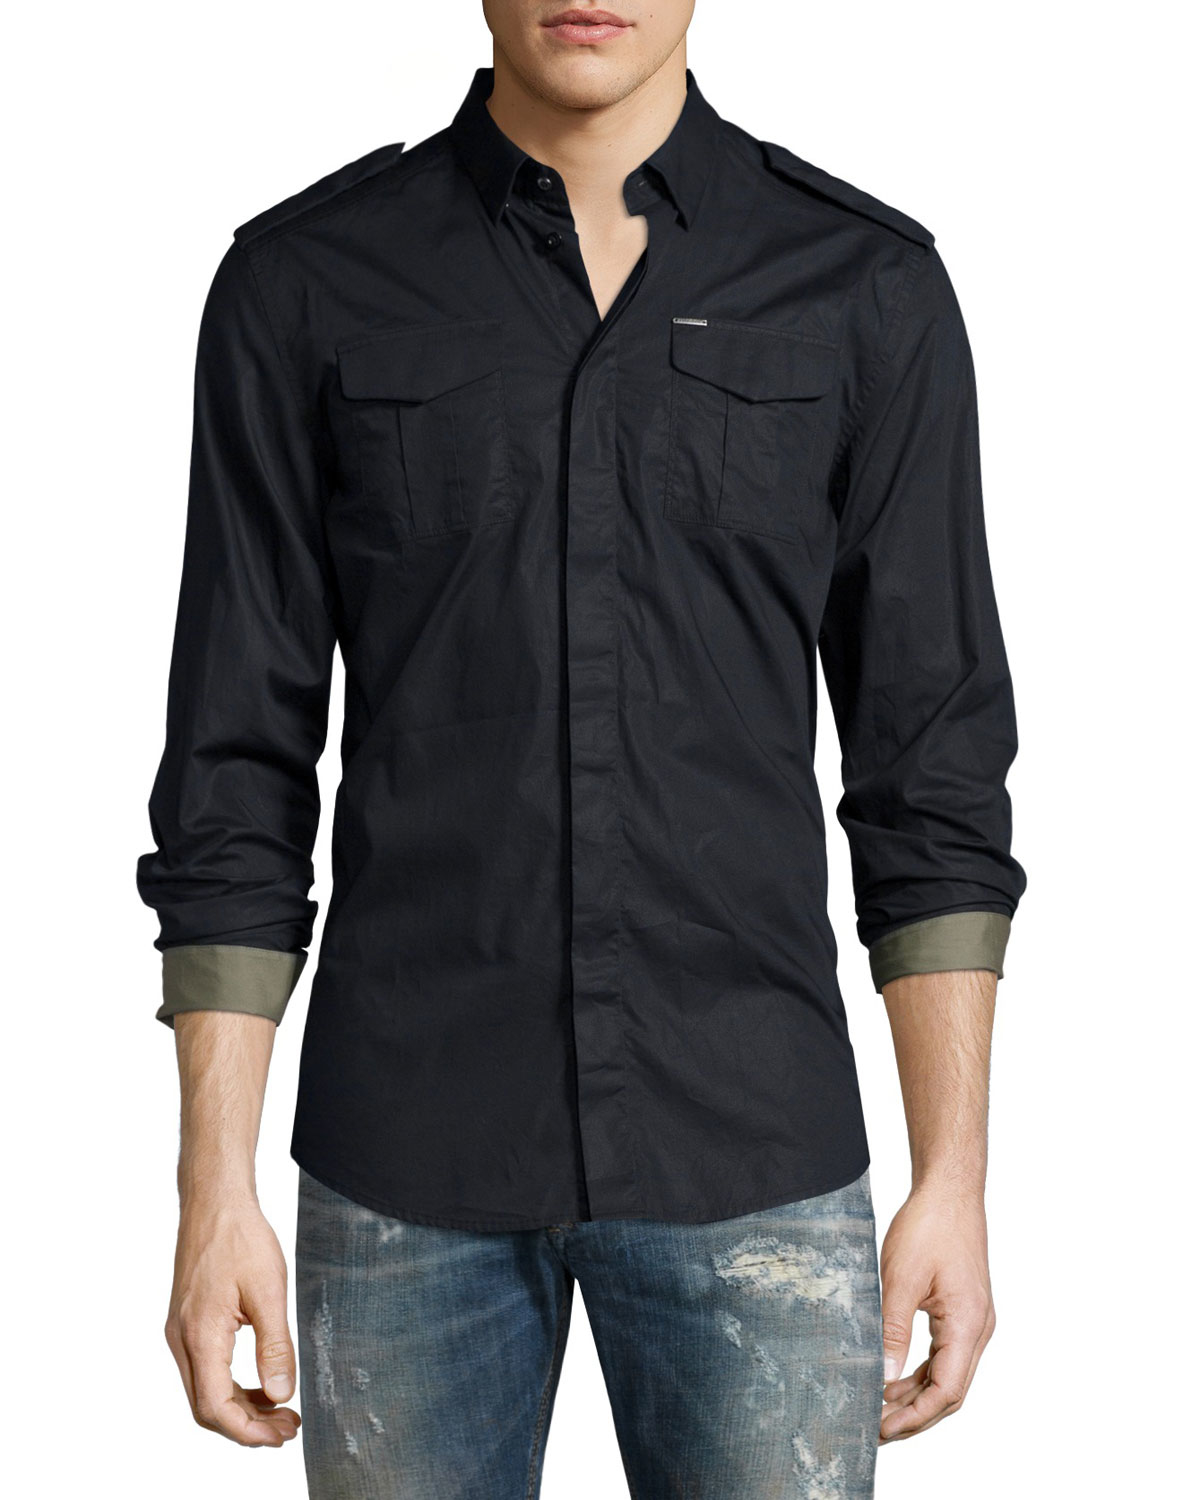 Lyst - Diesel S-haul Long-sleeve Military Shirt in Black for Men